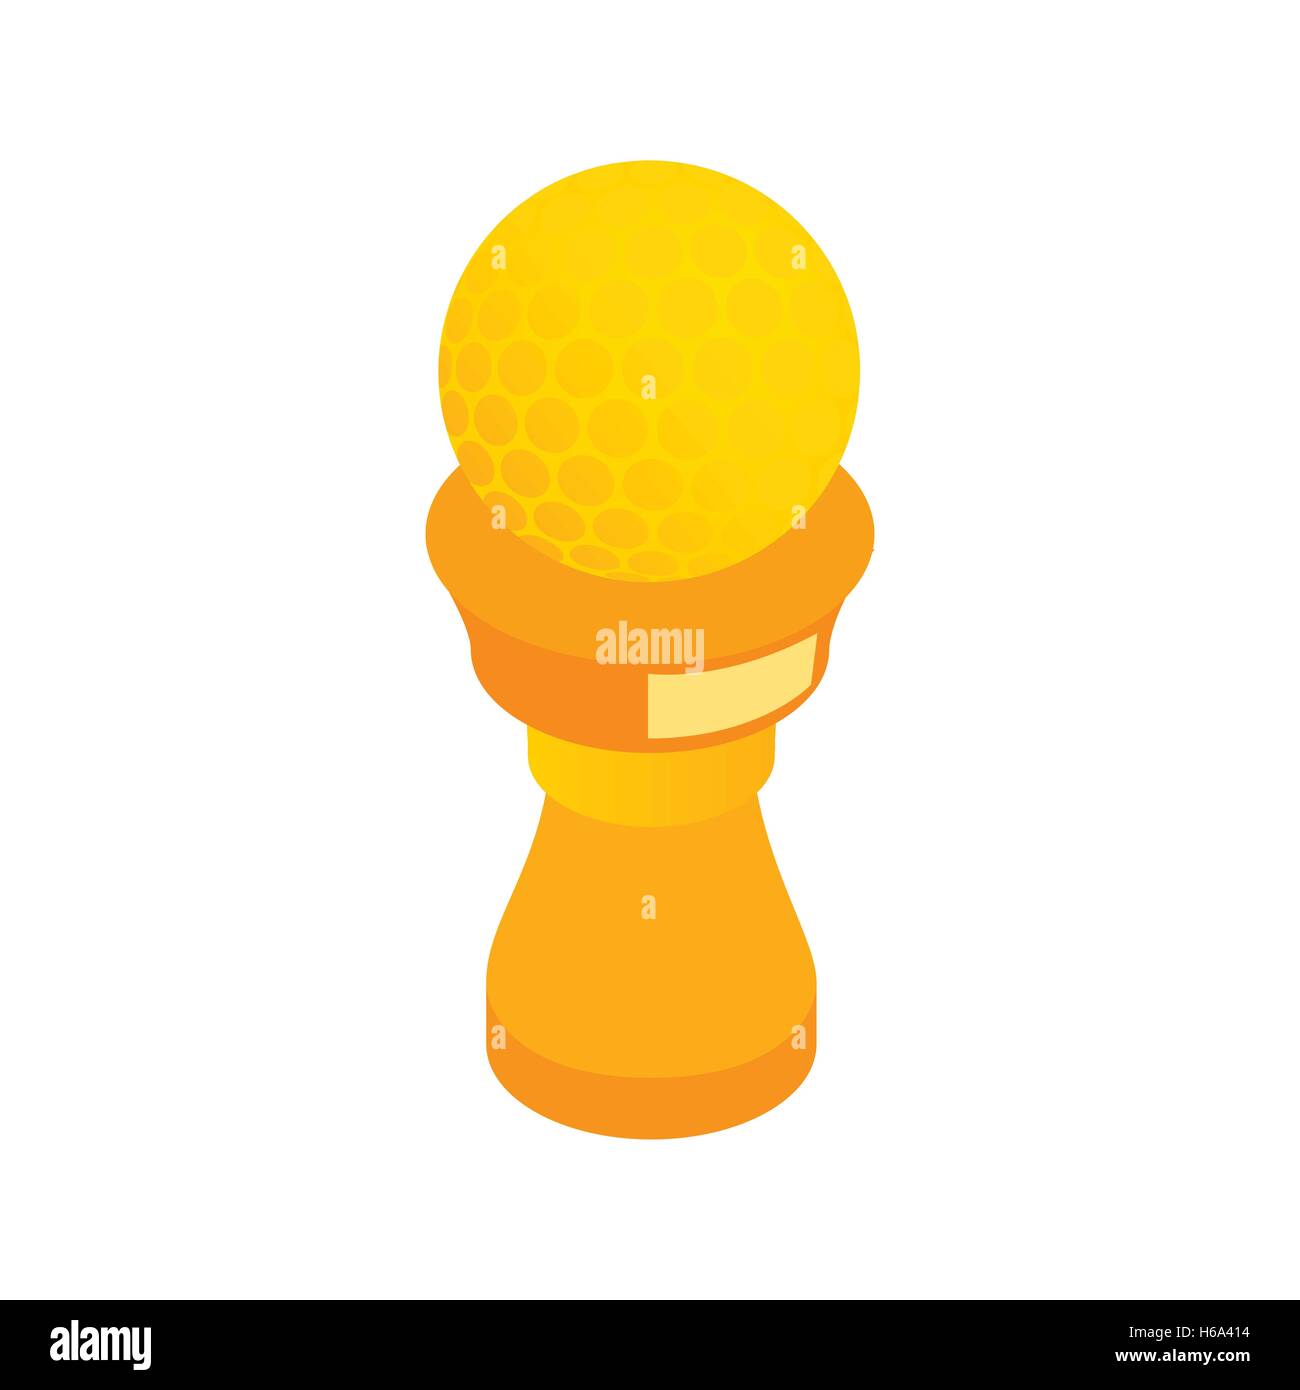 Golf ball on a yellow tee icon cartoon style Vector Image